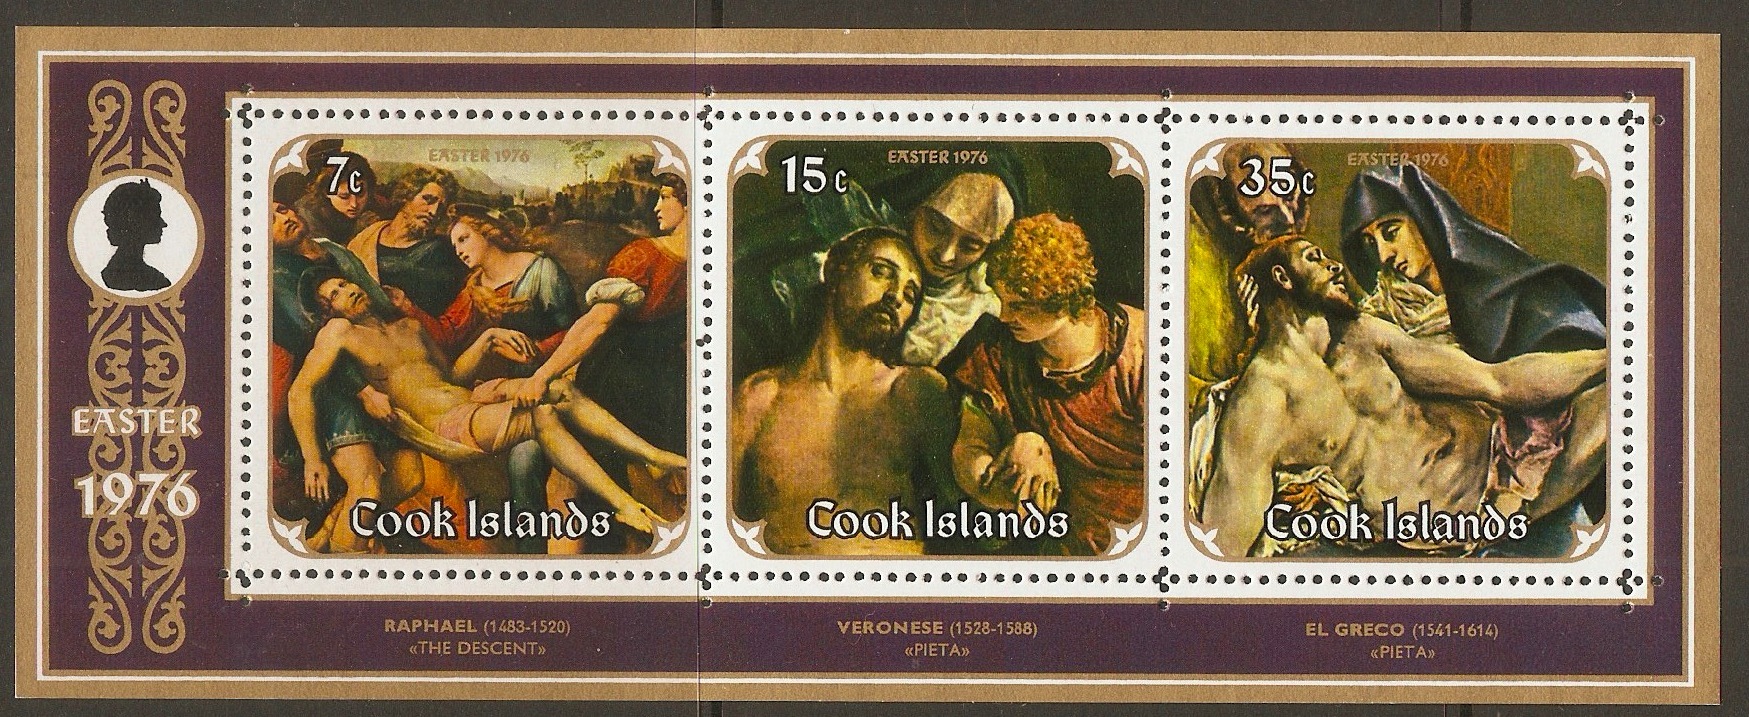 Cook Islands 1976 Easter stamps sheet. SGMS539.